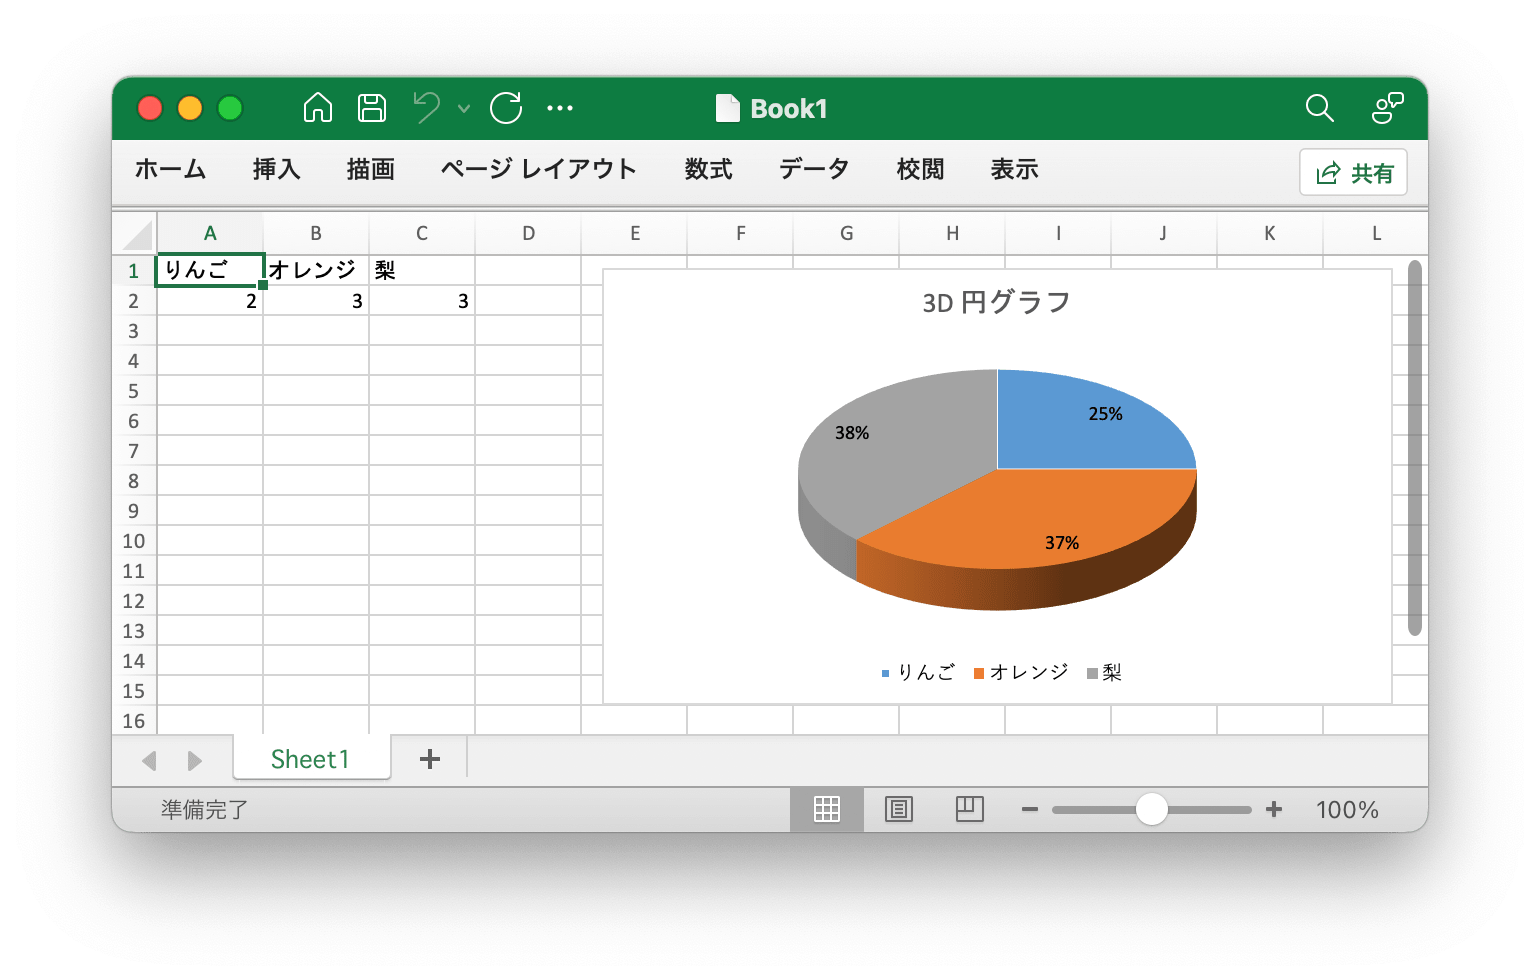 Go 言語を使用して Excel ドキュメントで 3D 円グラフ 作成する